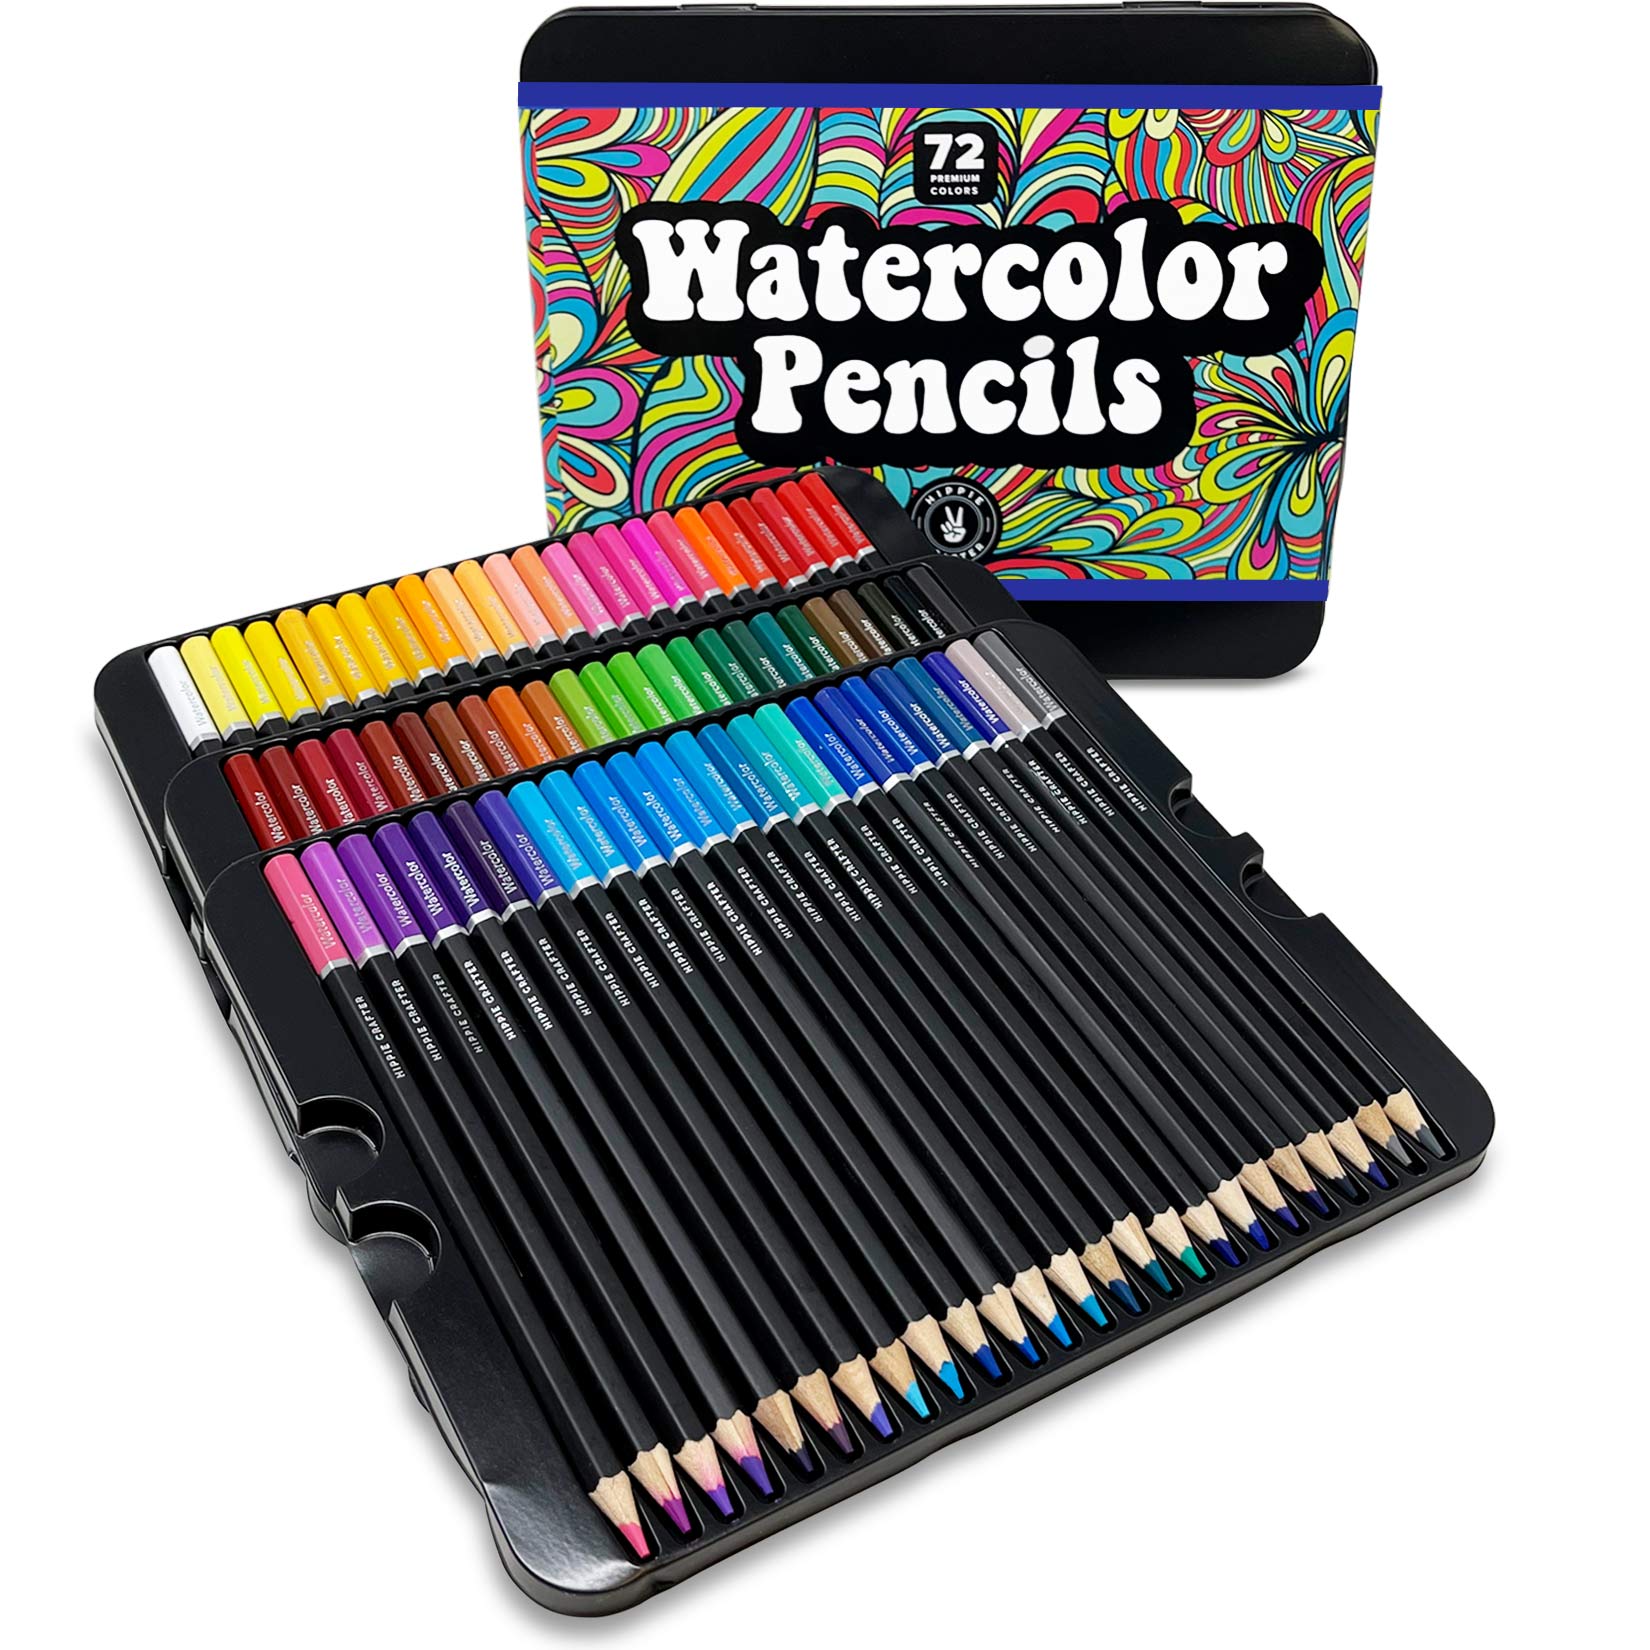  YNTCHENG Watercolor Pencils Colored Pencils,72Colors